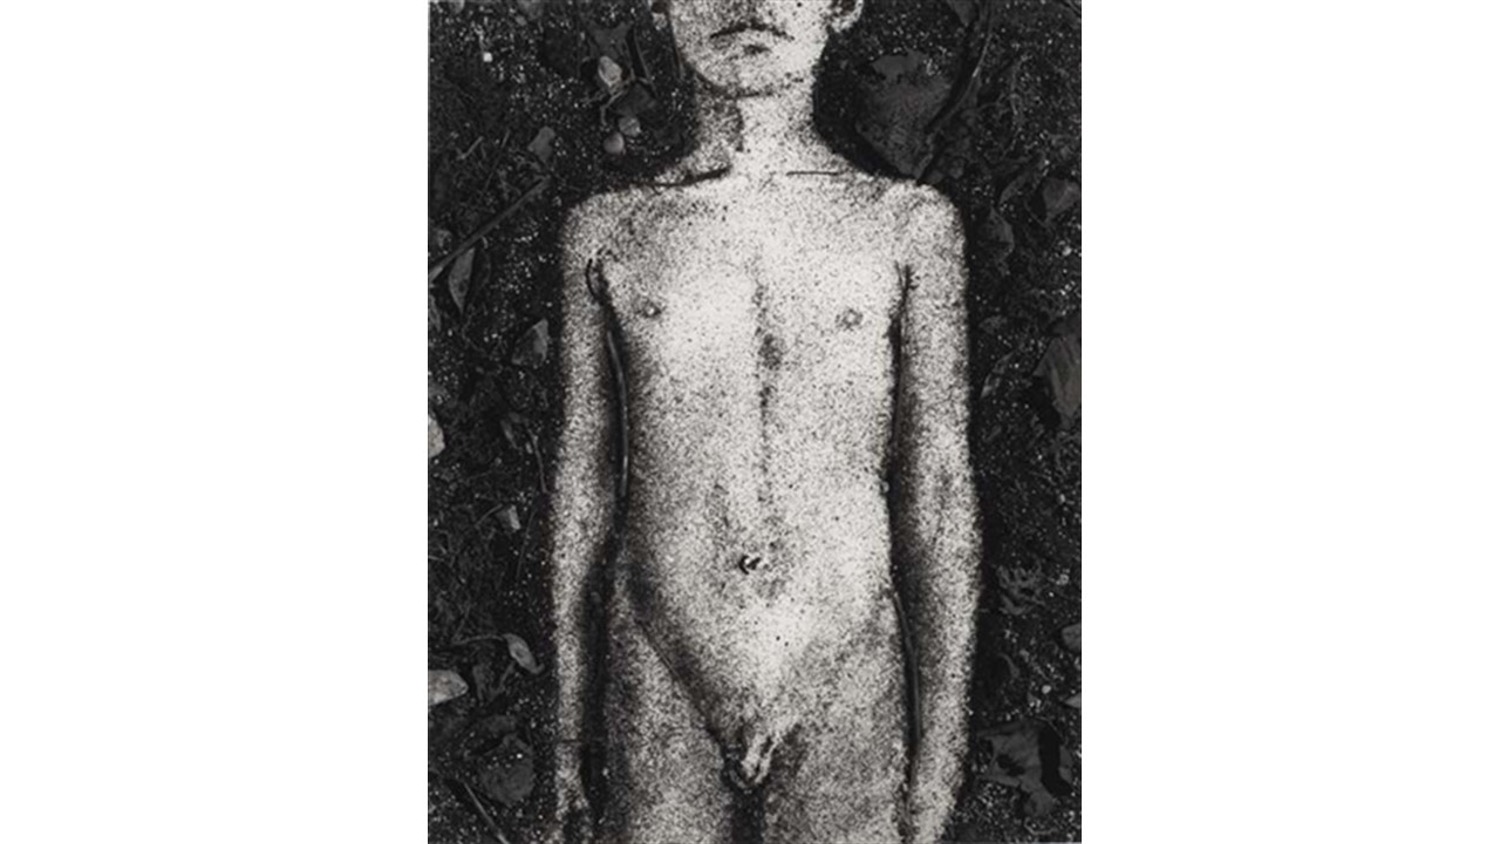 Vik Muniz. Brazilian artist represented by Galería Elba Benítez. "Youth (Gaspar)", 1998. Silver gelatin print. Ed. 4/5. 132 x 104 cm